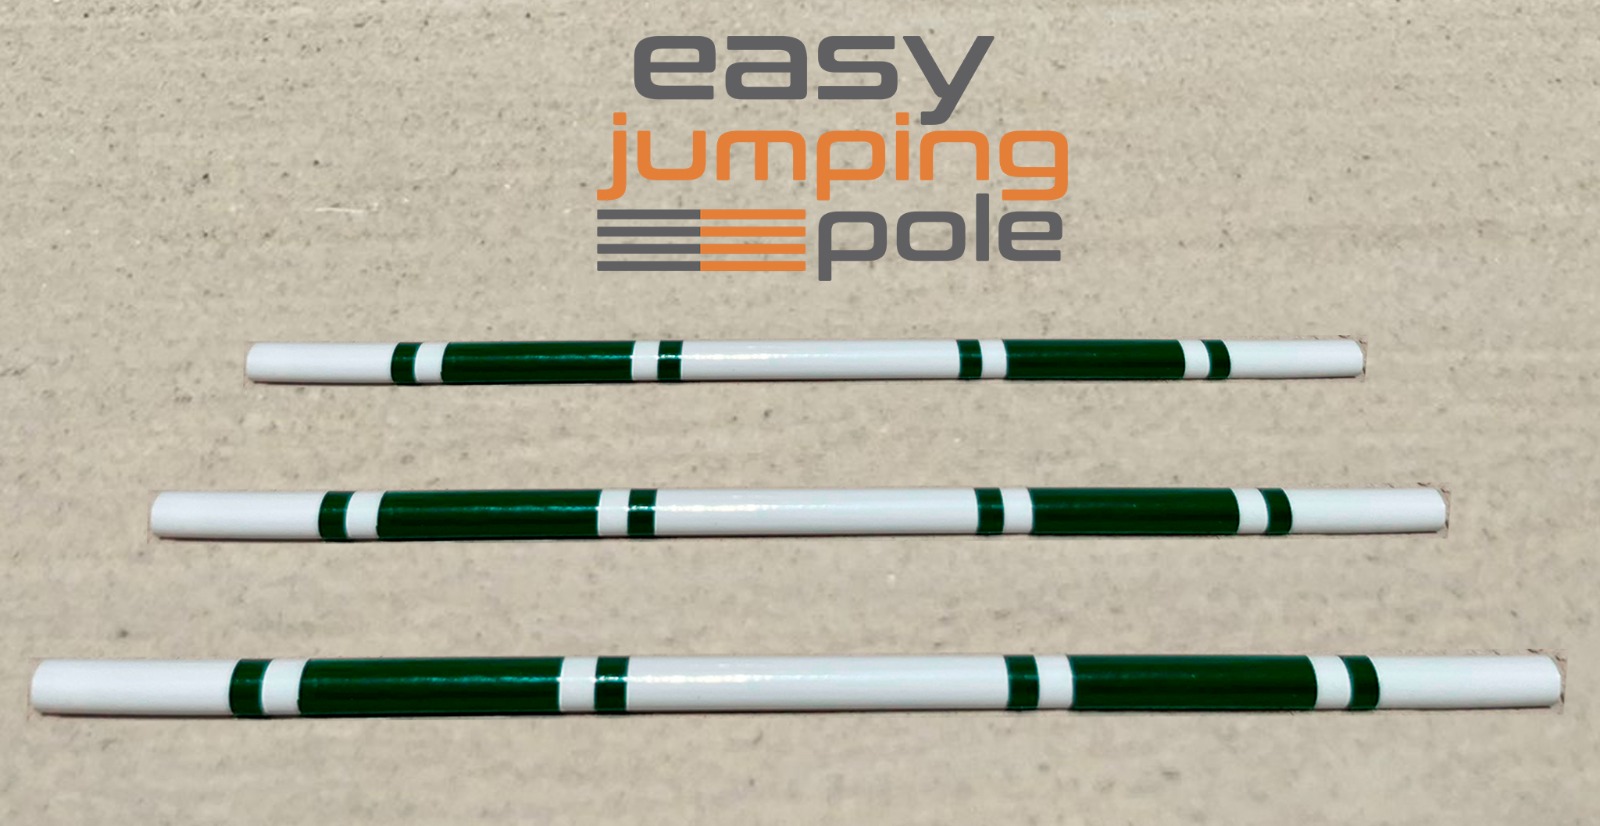 Easy jumping pole Model B-6